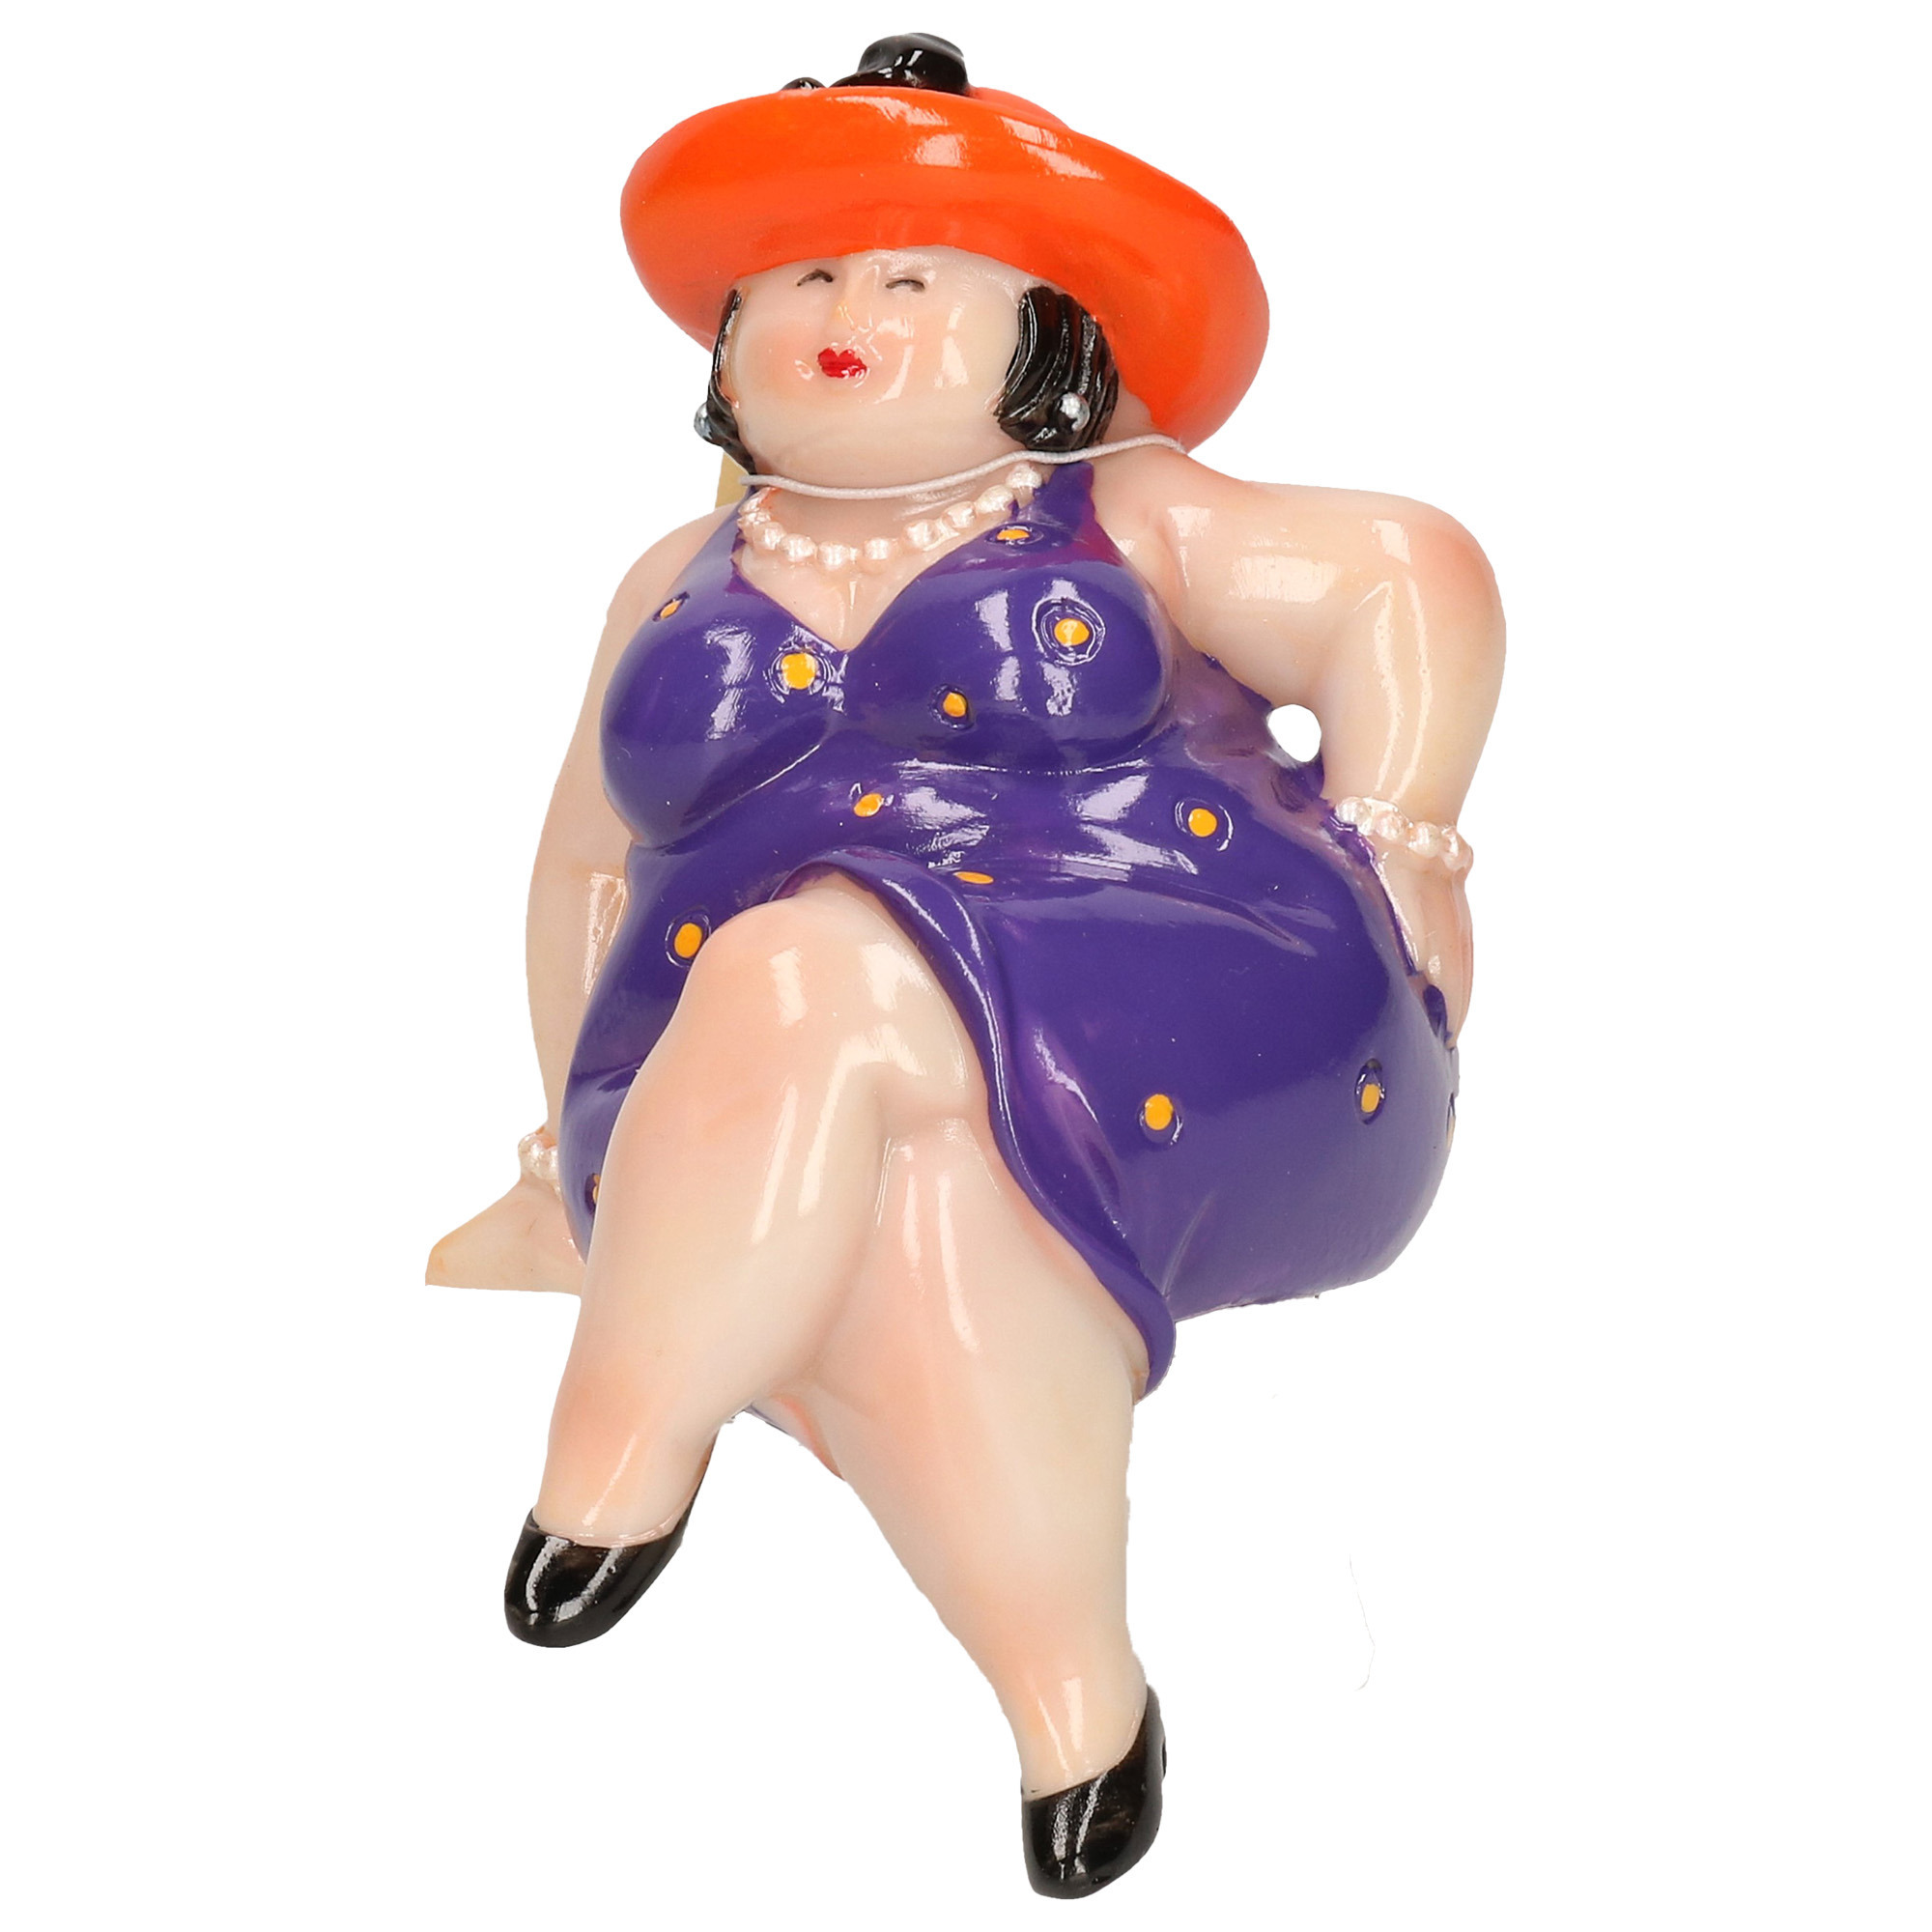 Woonkamer decoratie beeldje zittend dikke dame jurk paars 15 cm